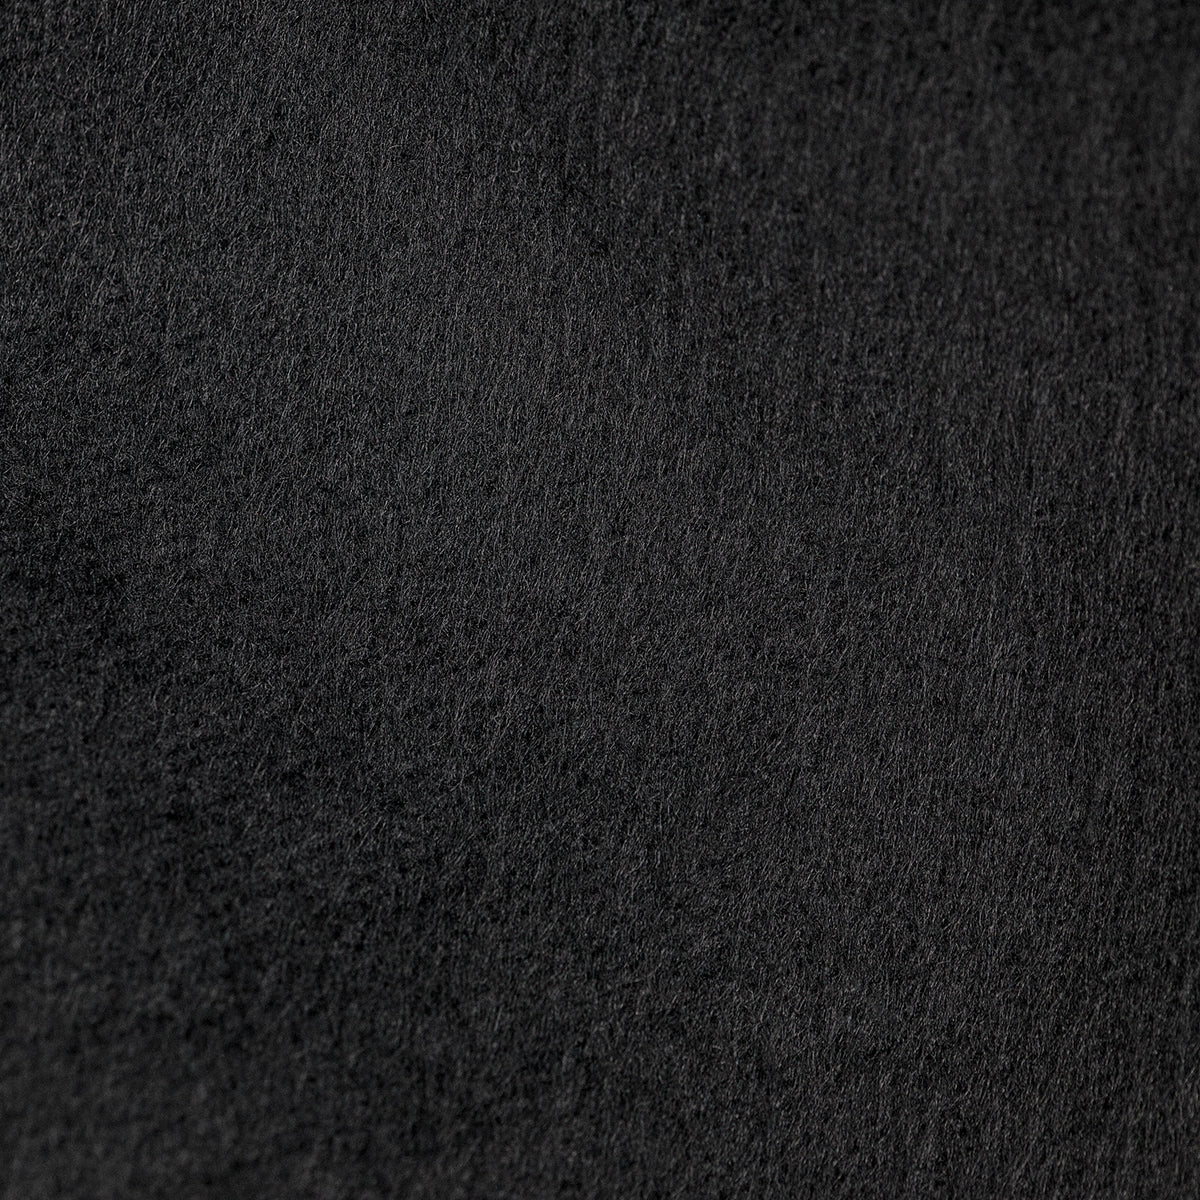 Scrim Jim Cine Black Block Fabric (6' x 6')